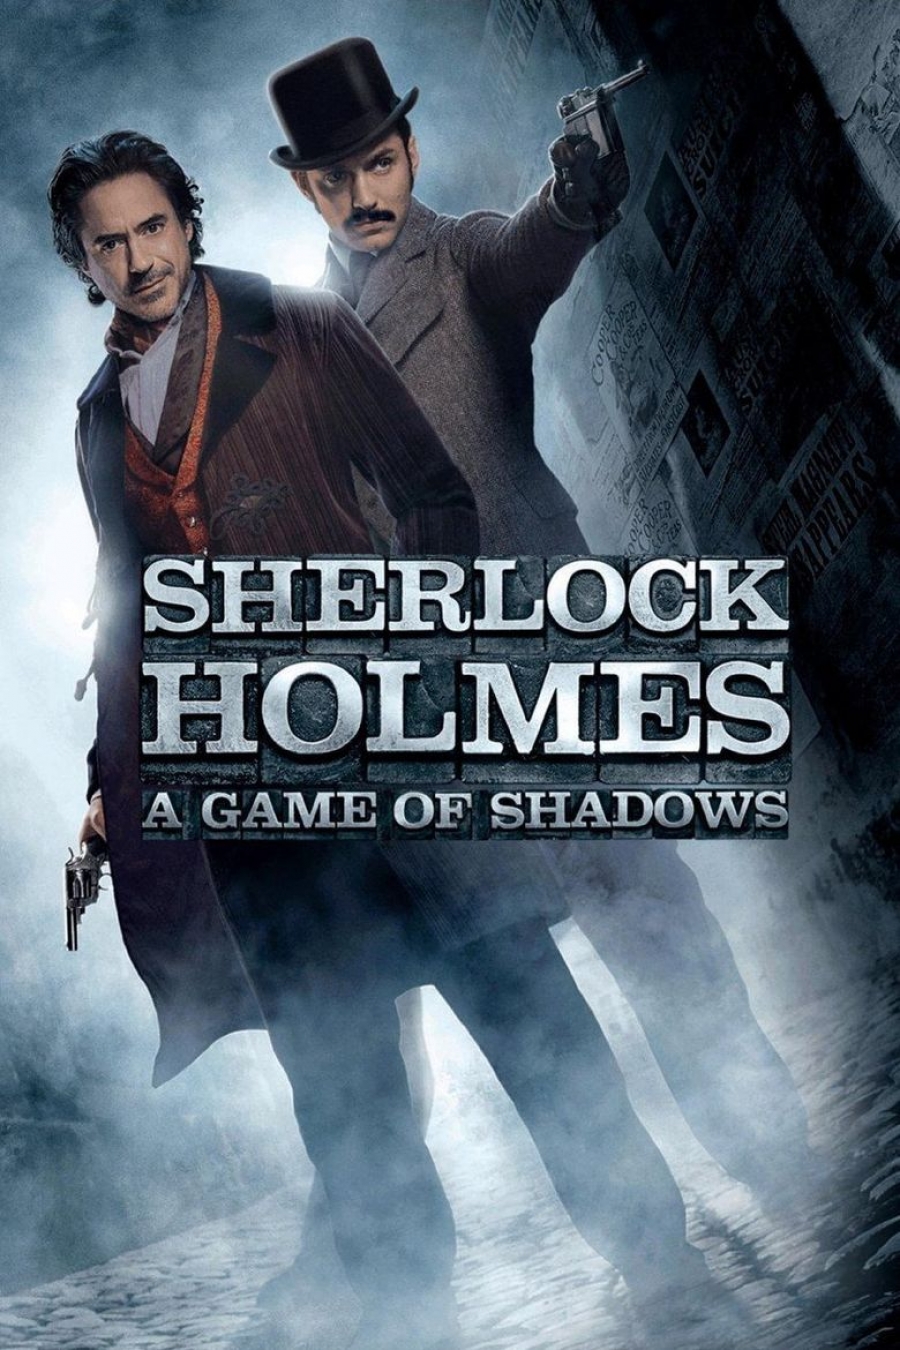 Sherlock Holmes 2 A Game Of Shadows (2011) เชอร์ล็อค โฮล์มส์ 2 เกมพญายมเงามรณะ - ดูหนังออนไลน